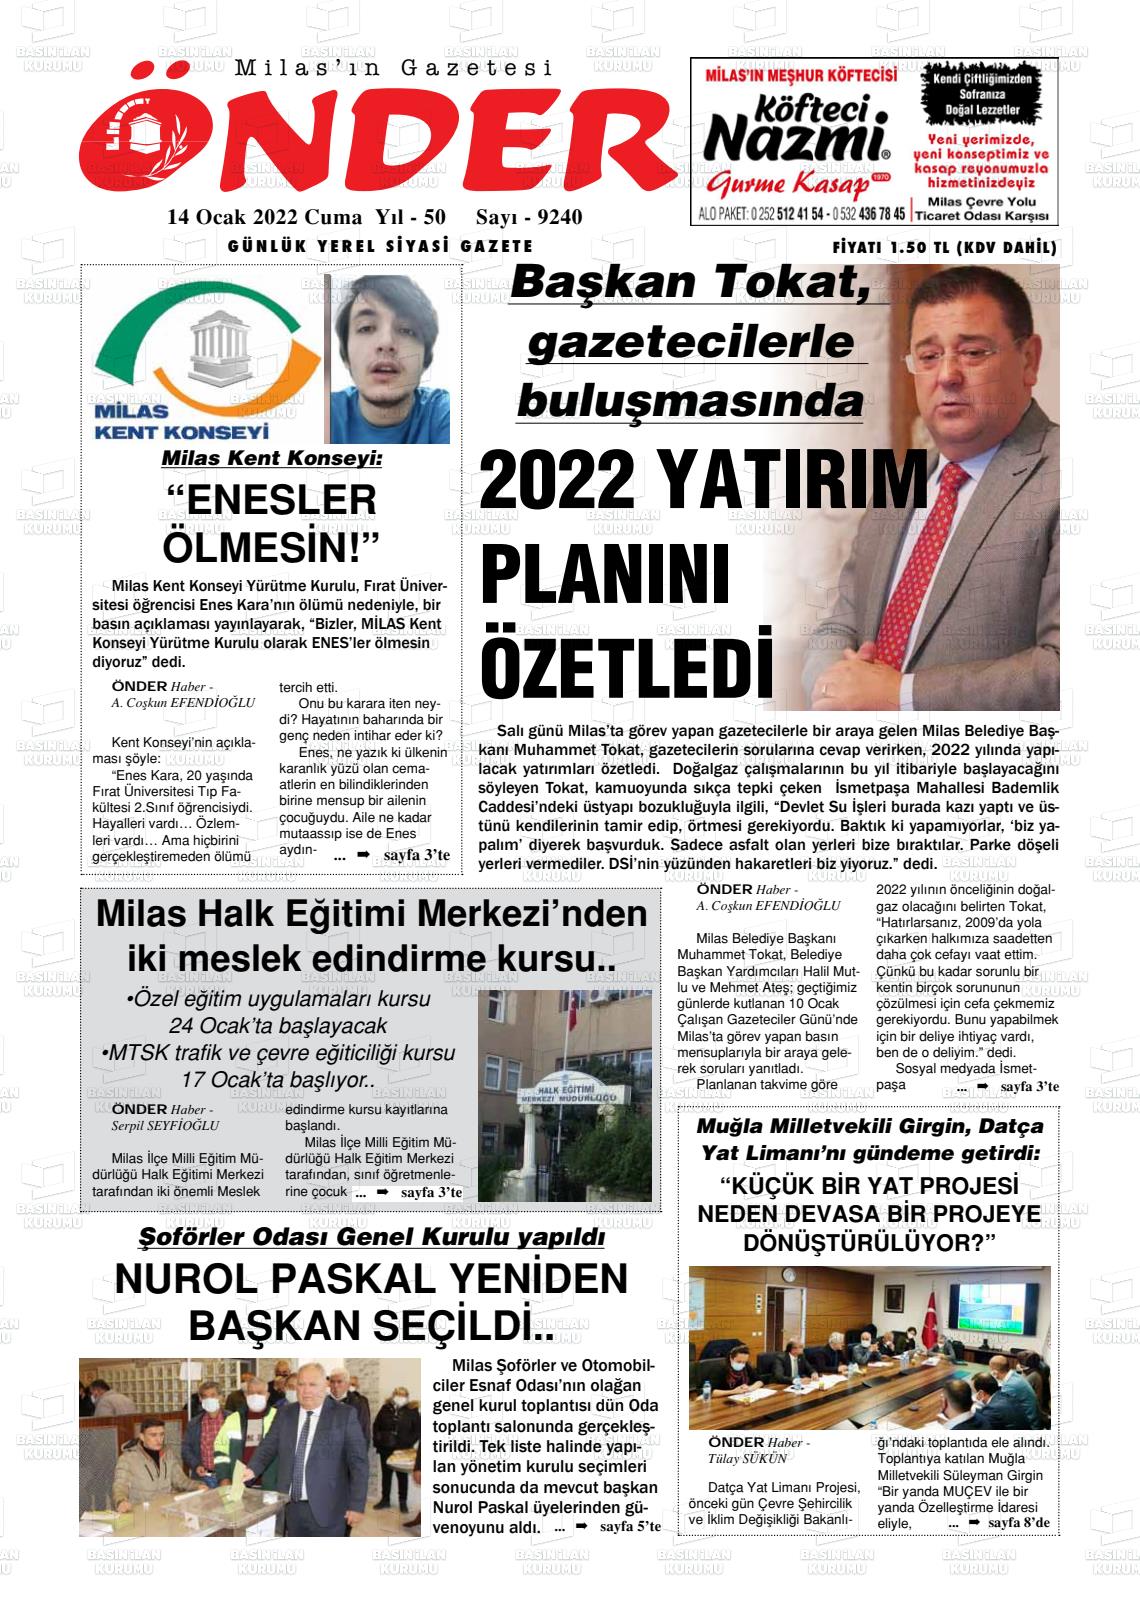 14 Ocak 2022 Milas Önder Gazete Manşeti